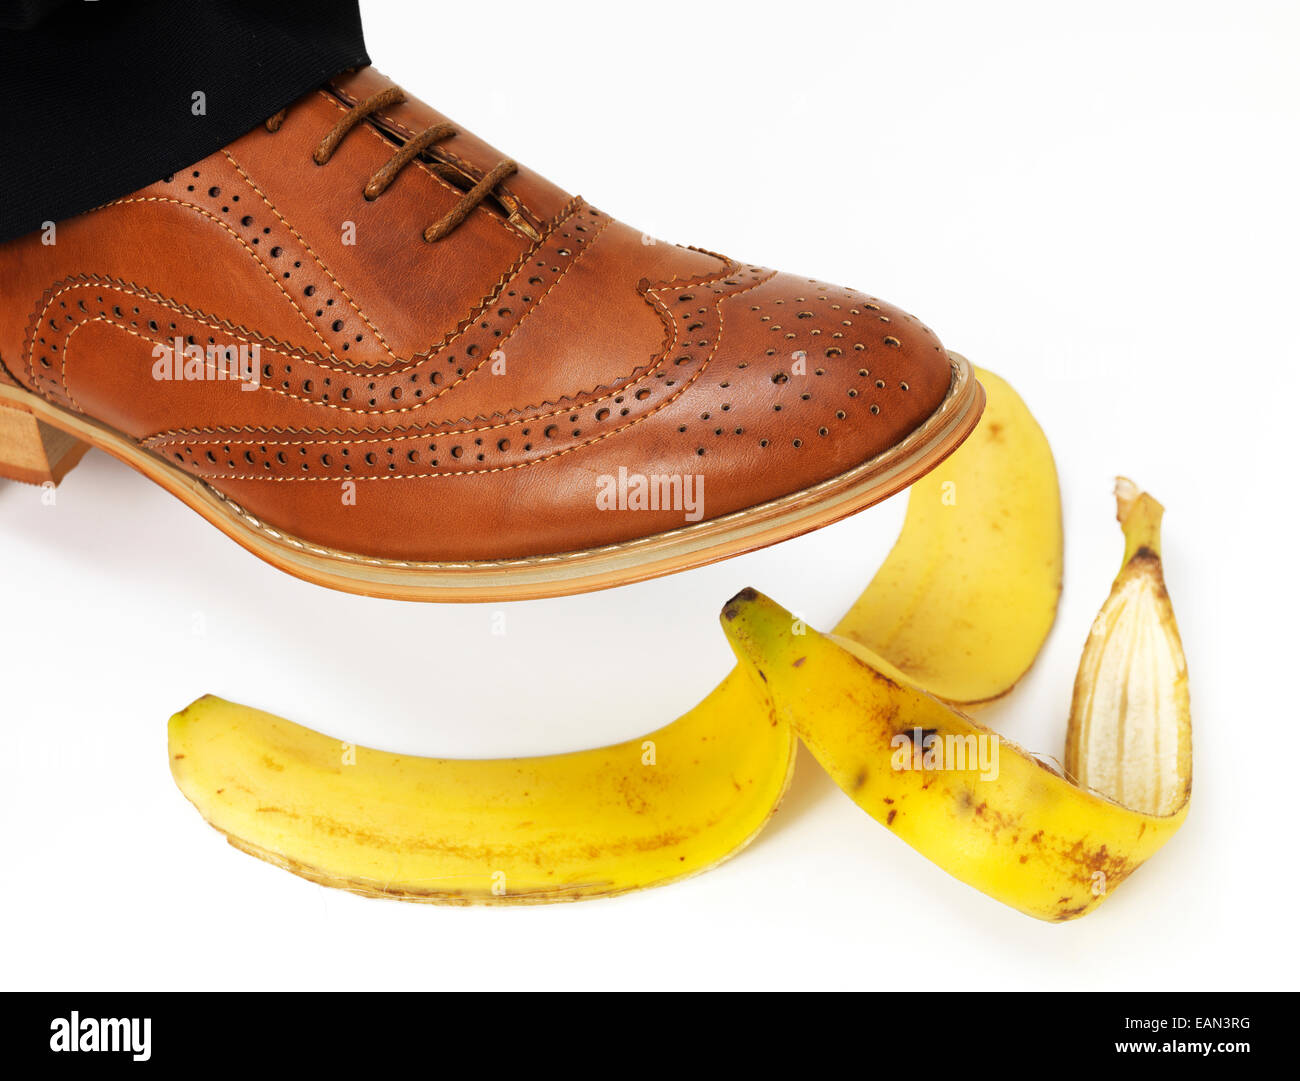 Brown Brogue slipping on a banana Stock Photo